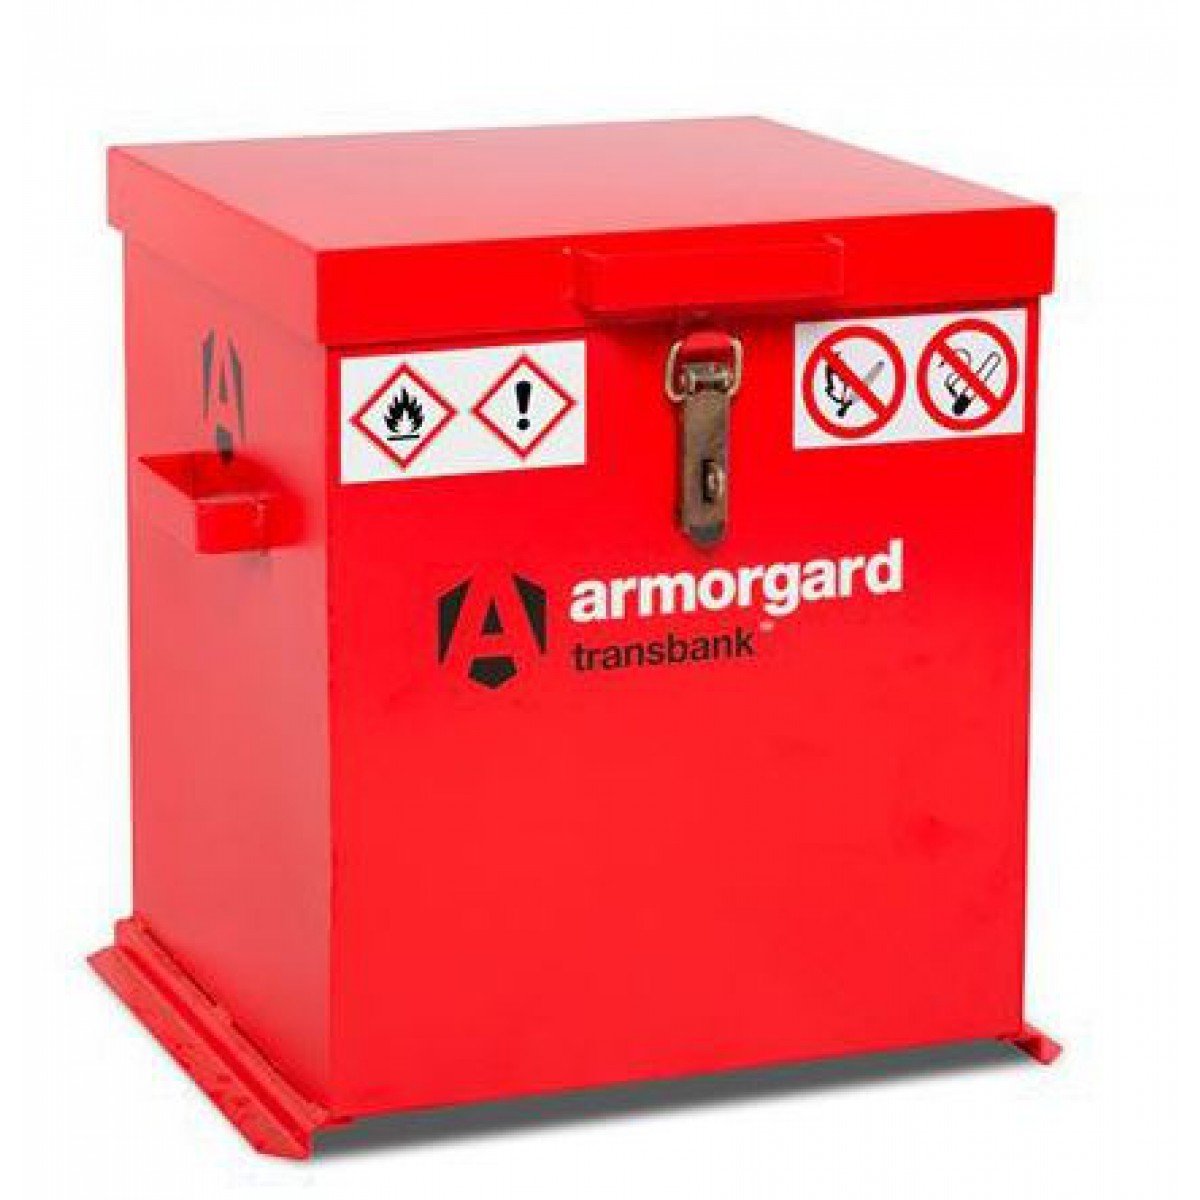 Armorgard Transbank COSHH Hazardous Material Storage Container